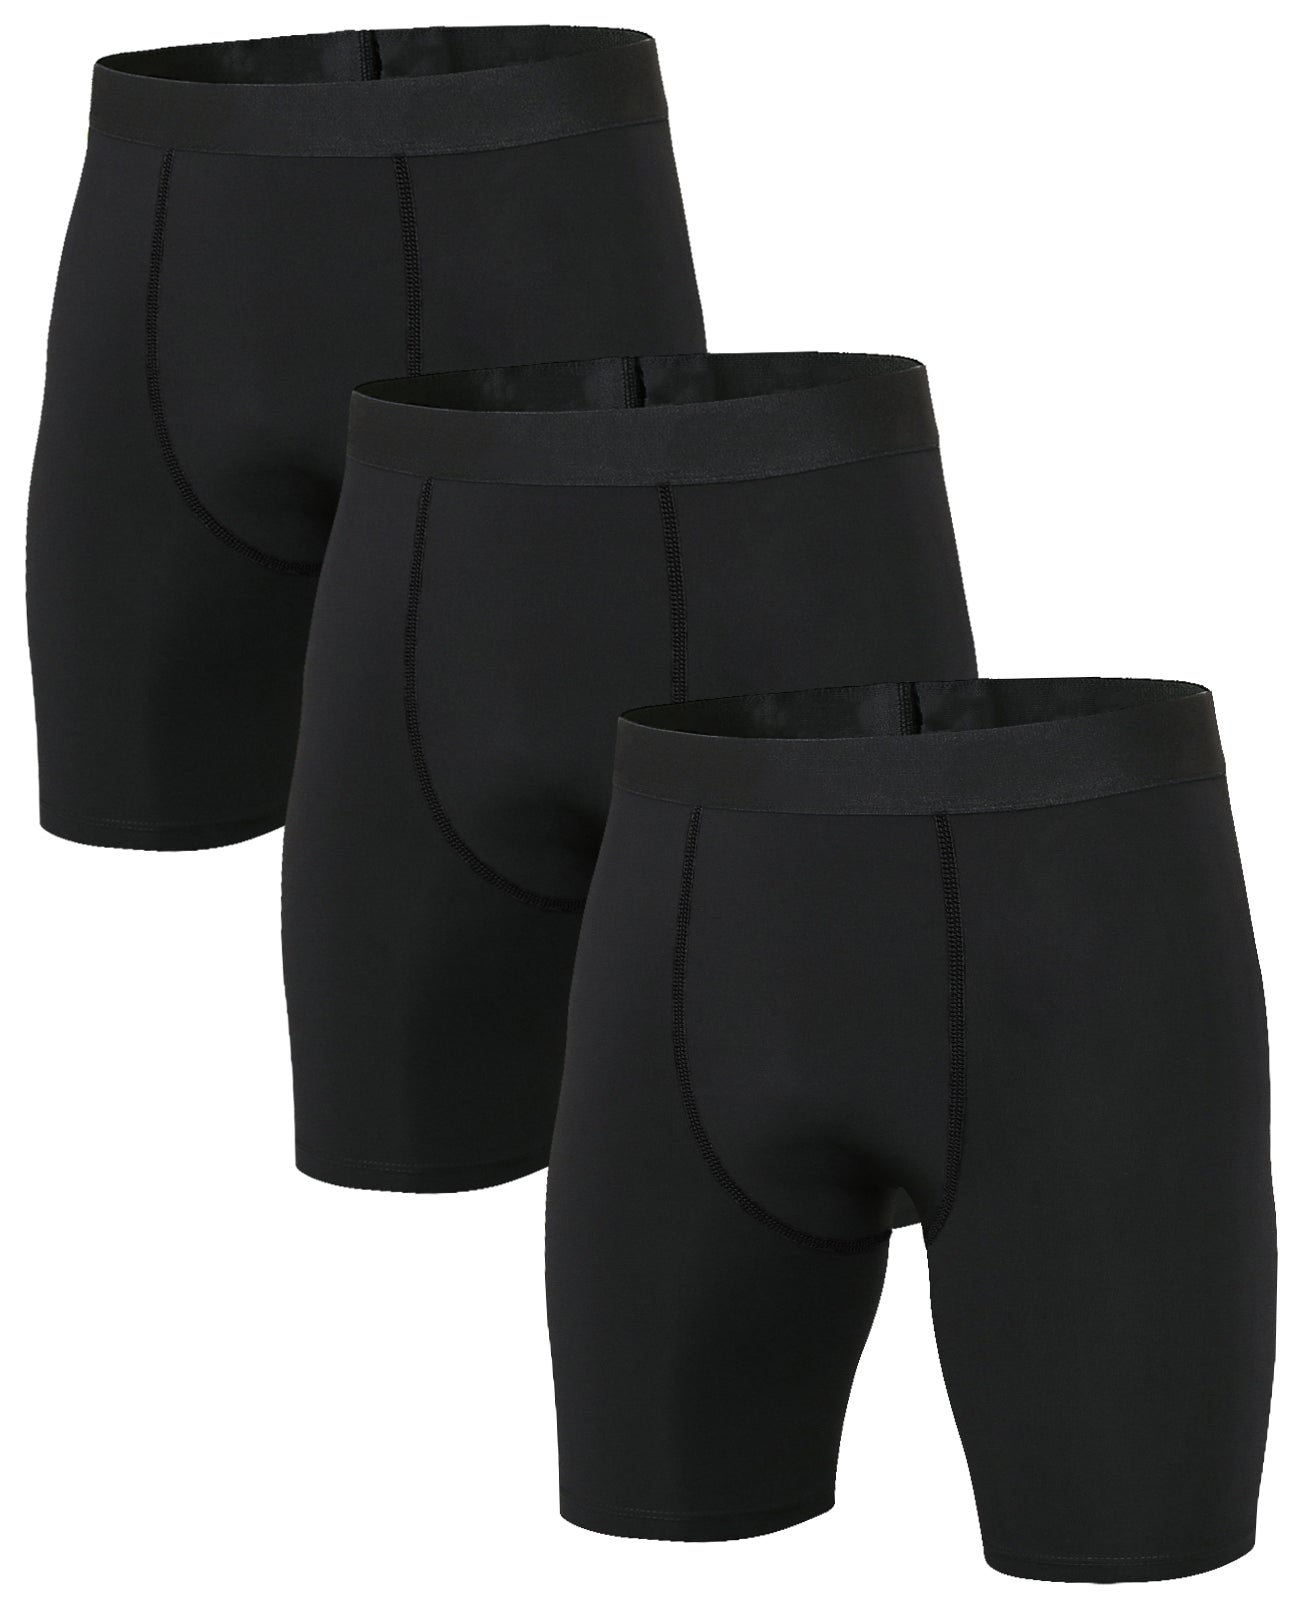 Niksa Compression Shorts Men 3 Pack